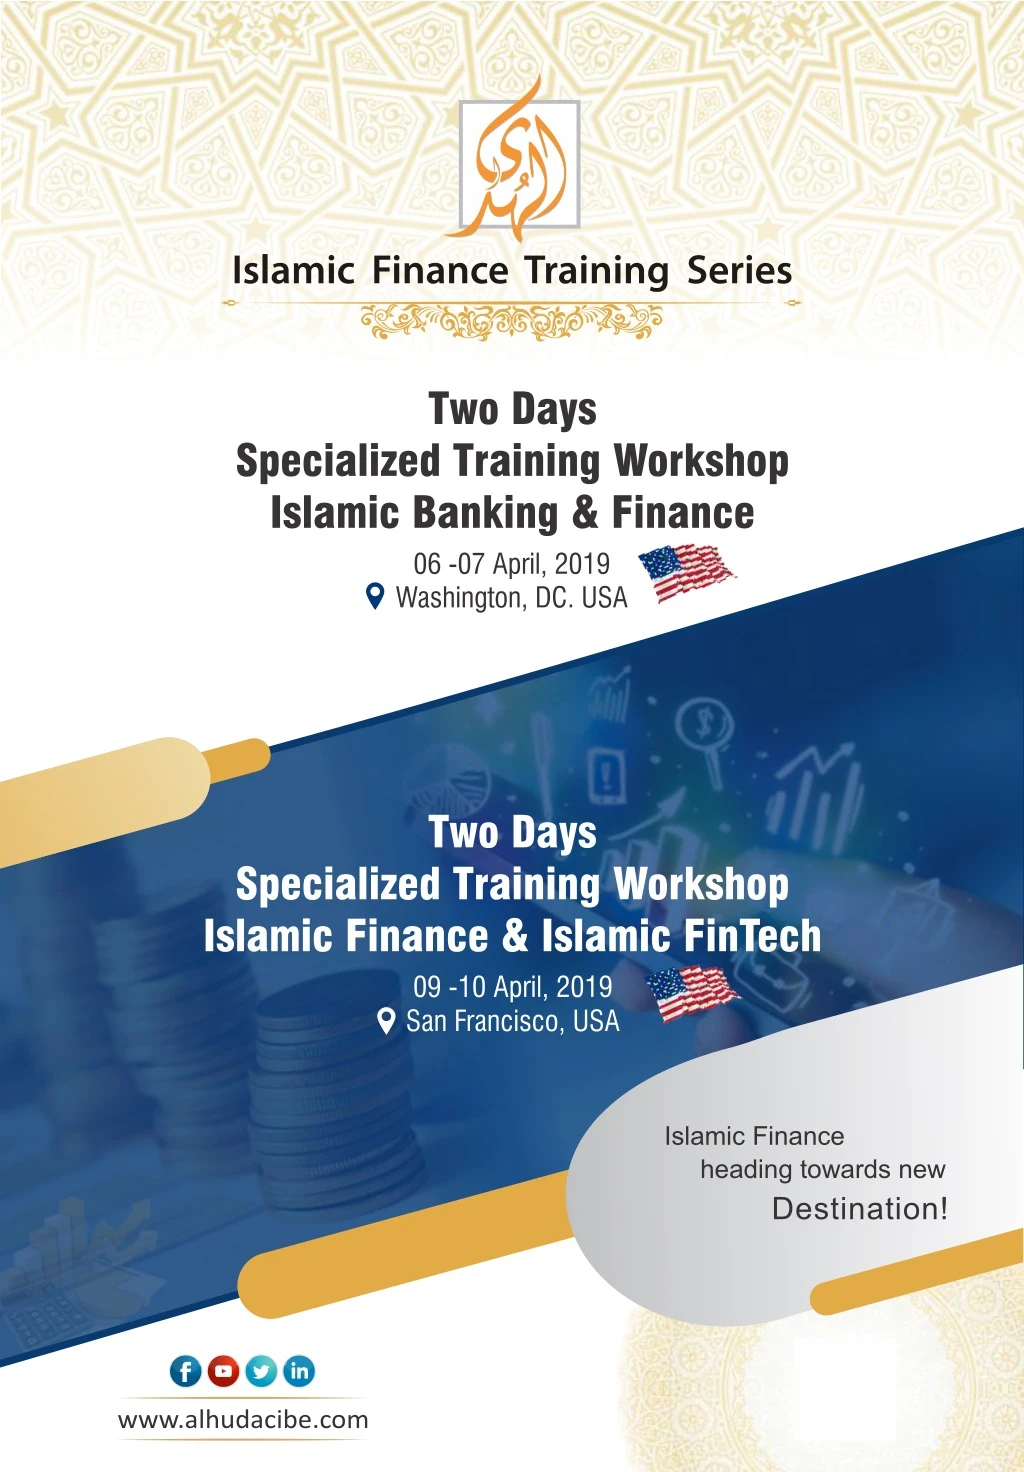 islamic finance heading towards new destination